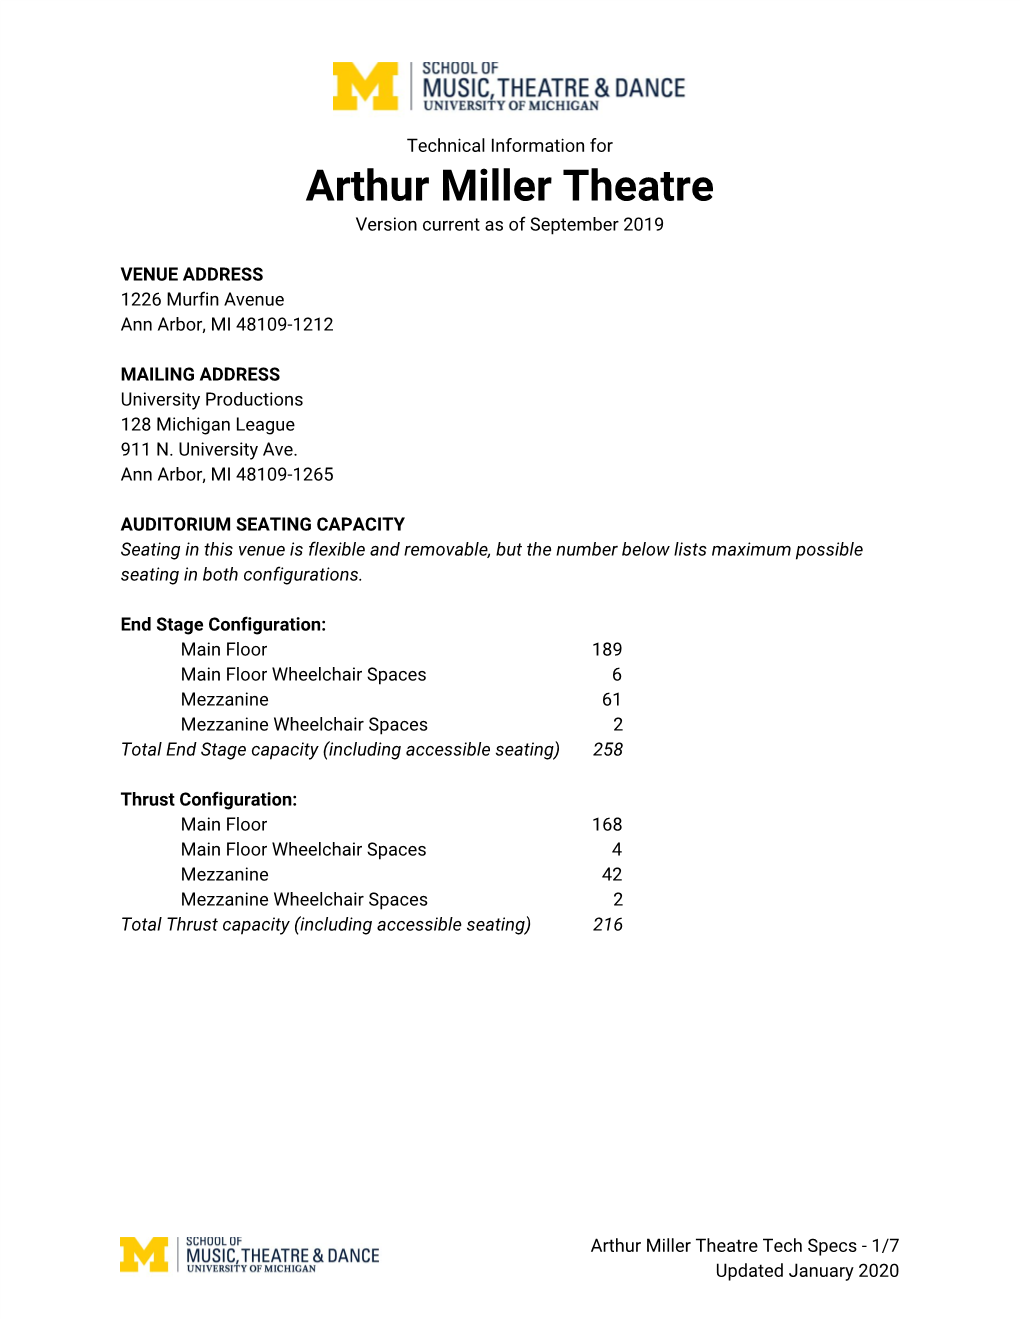 Arthur Miller Theatre Version Current As of September 2019